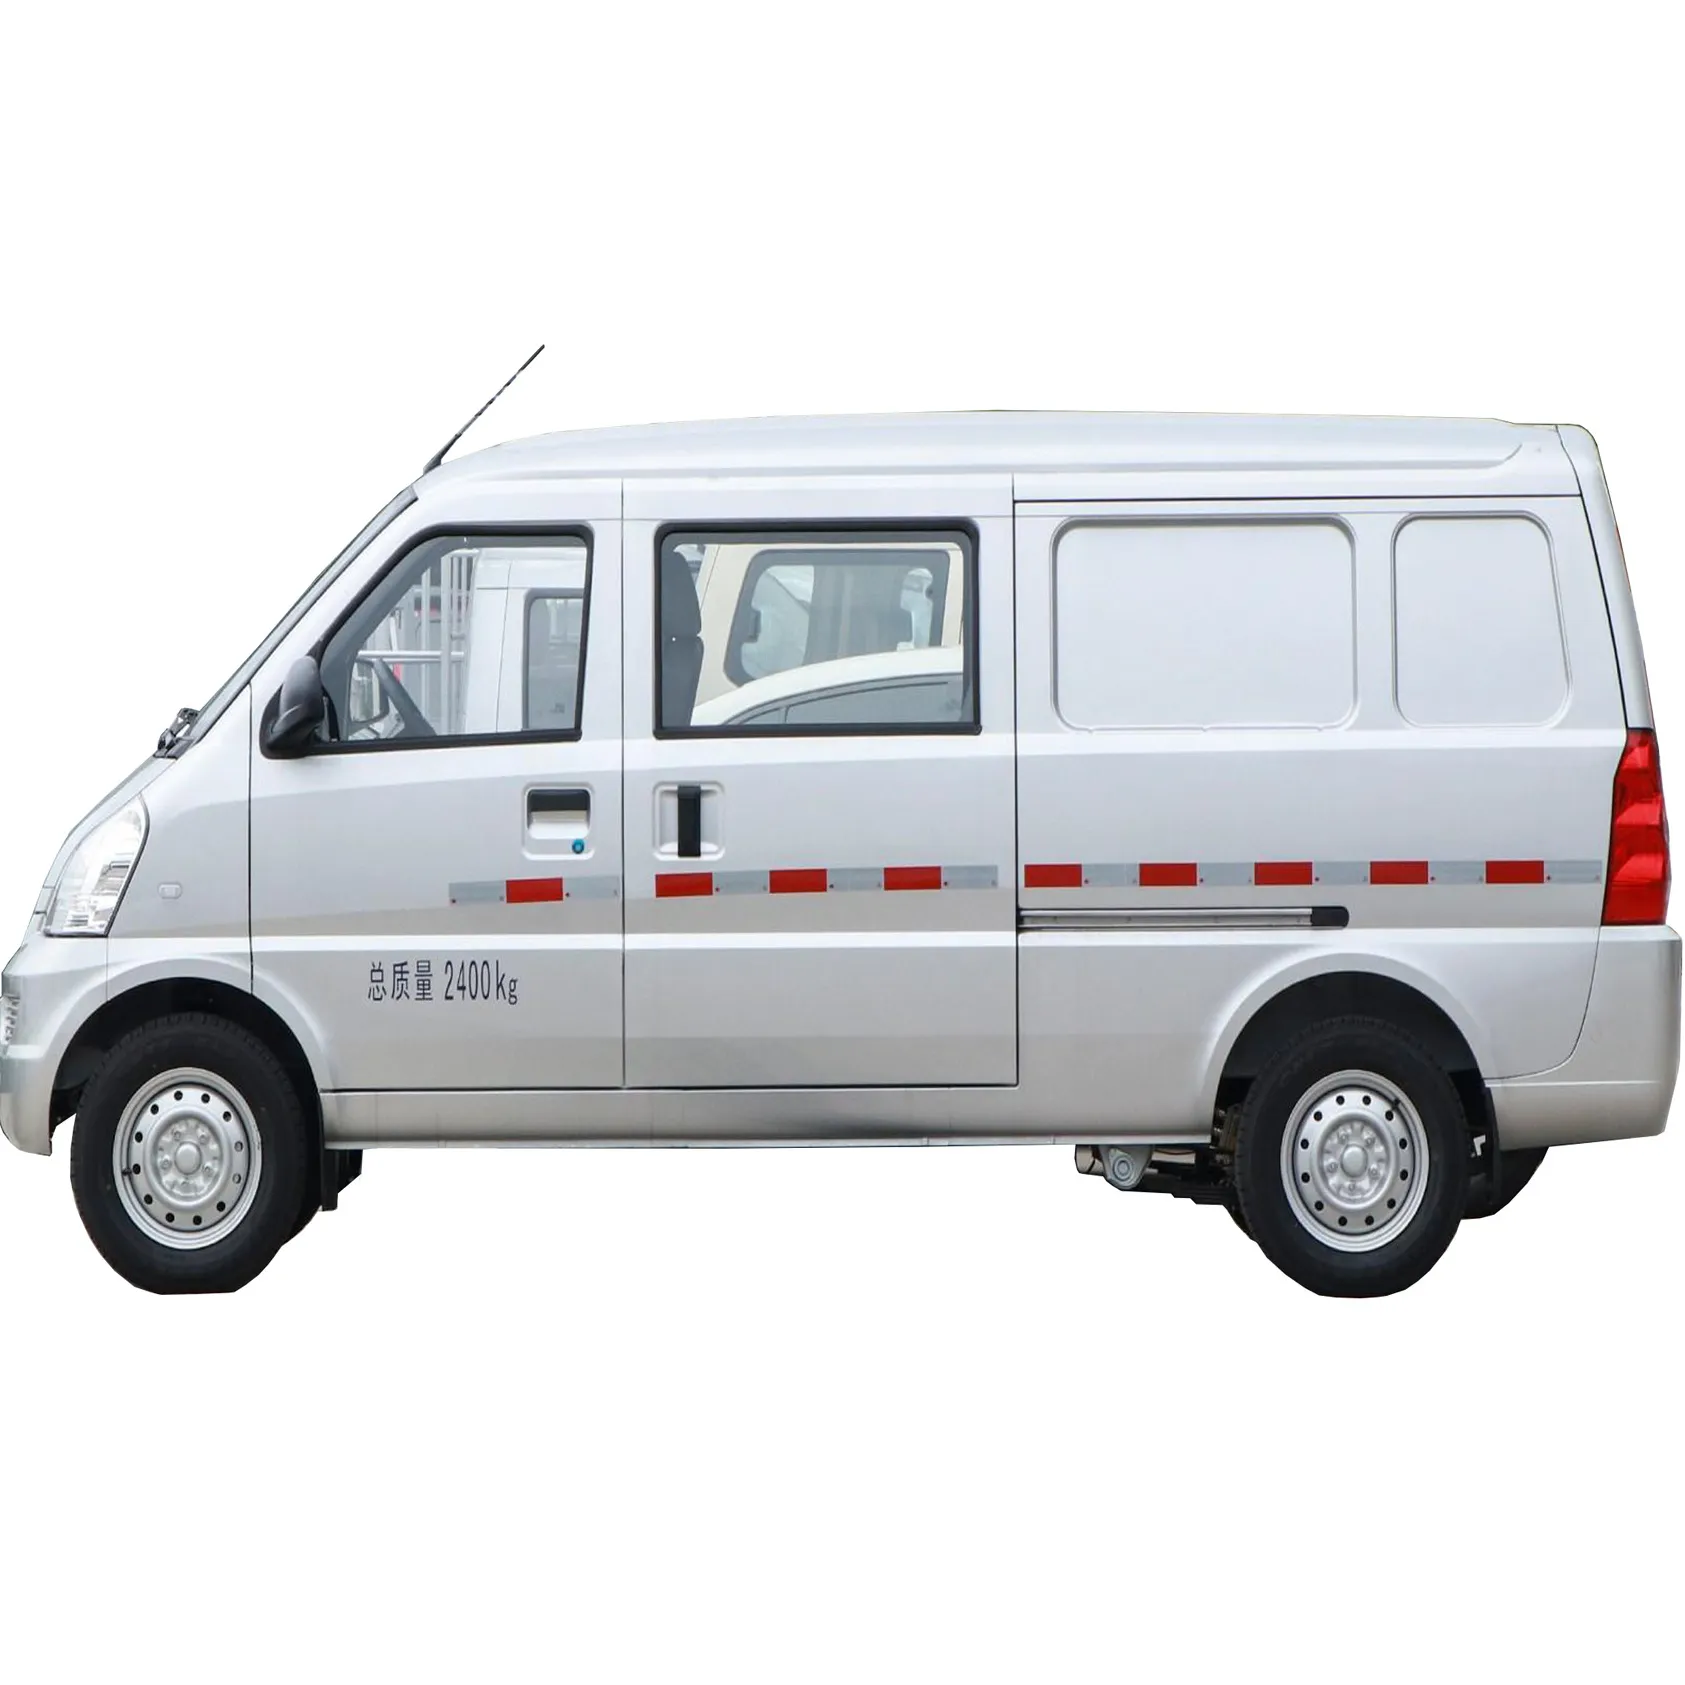 LHD ev araba SGMV wuling rongguang yeni enerji araç 300km minibüs yüksek hızlı motor van elektrikli minivan satılık